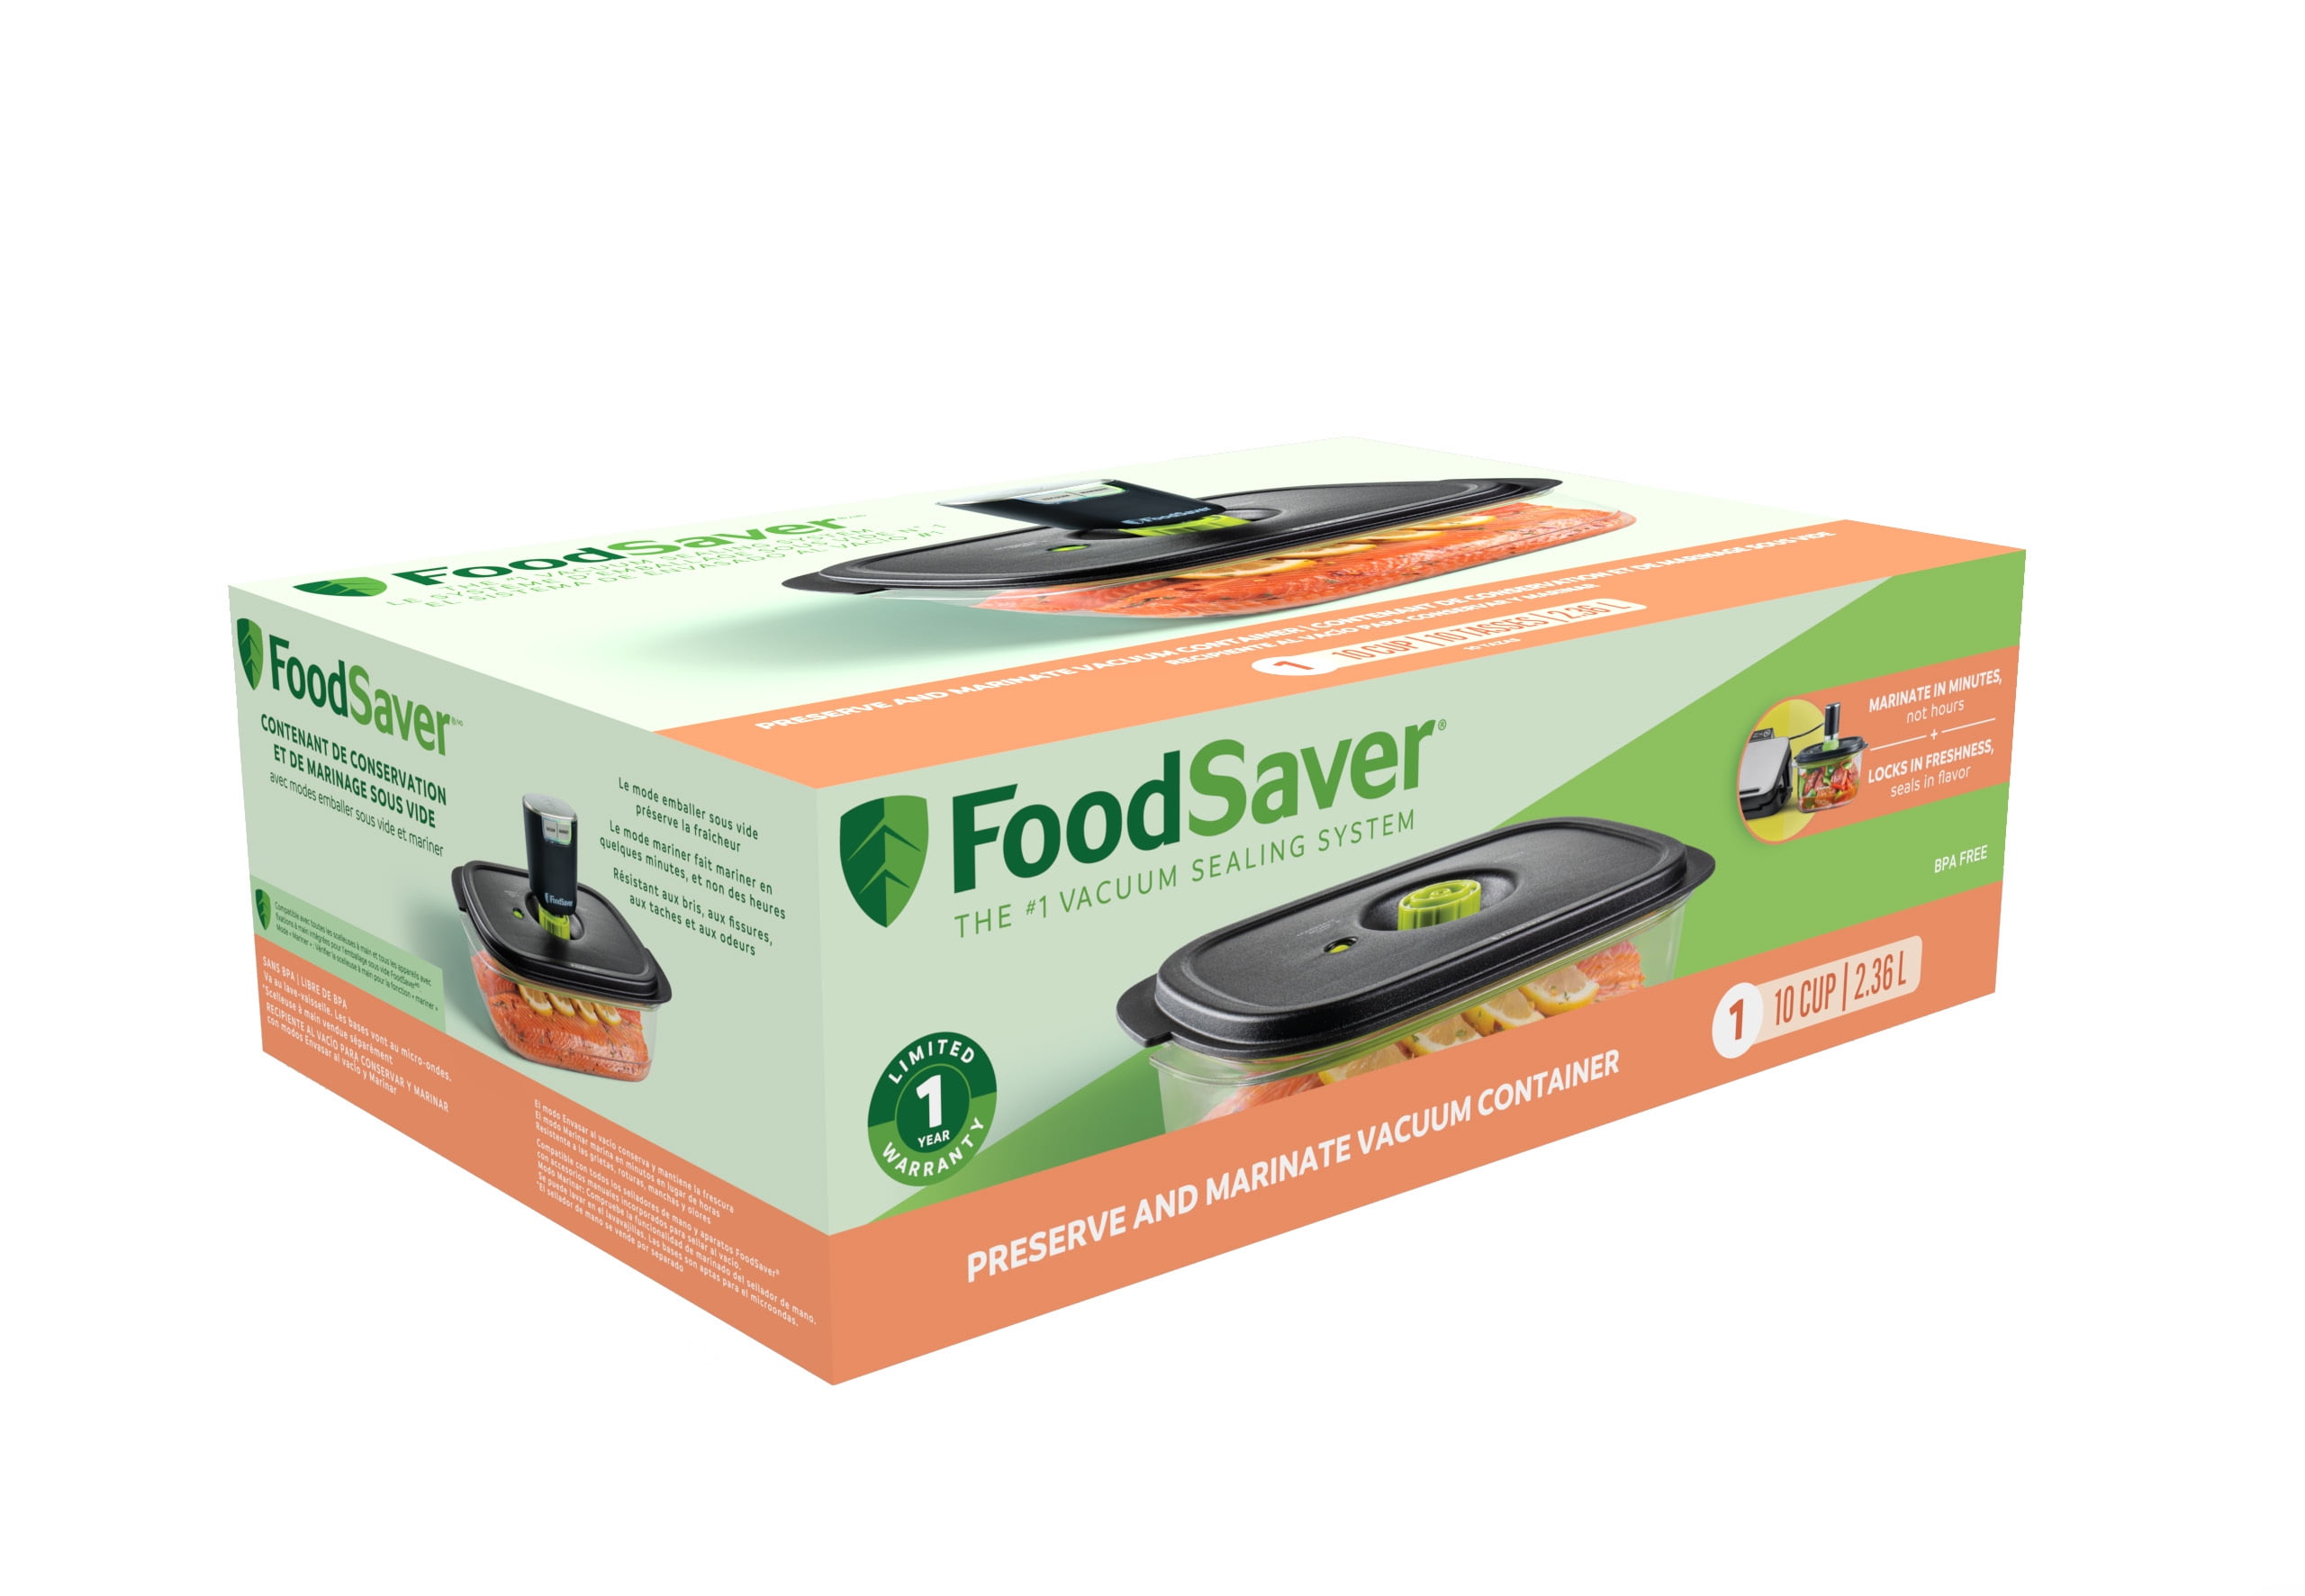  FoodSaver 2116382 Preserve & Marinate Vacuum